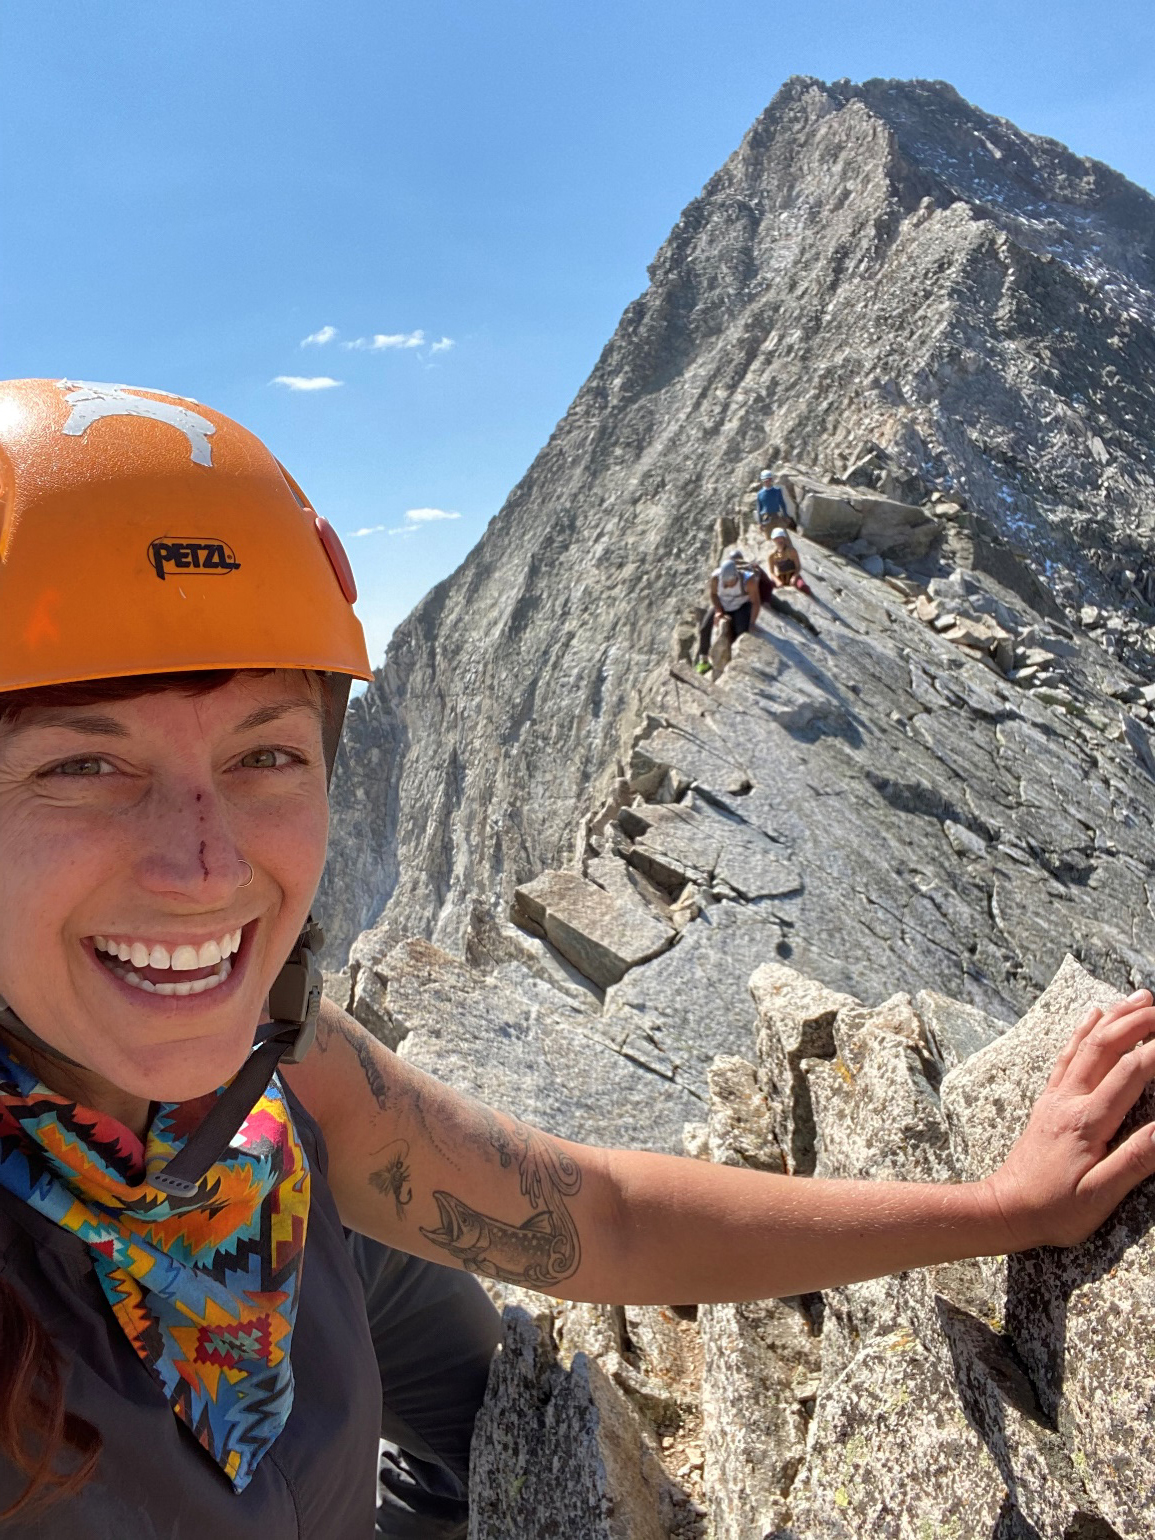 Jessie Creamean climbs Capitol Peak in Colorado wearing an orange helmet.